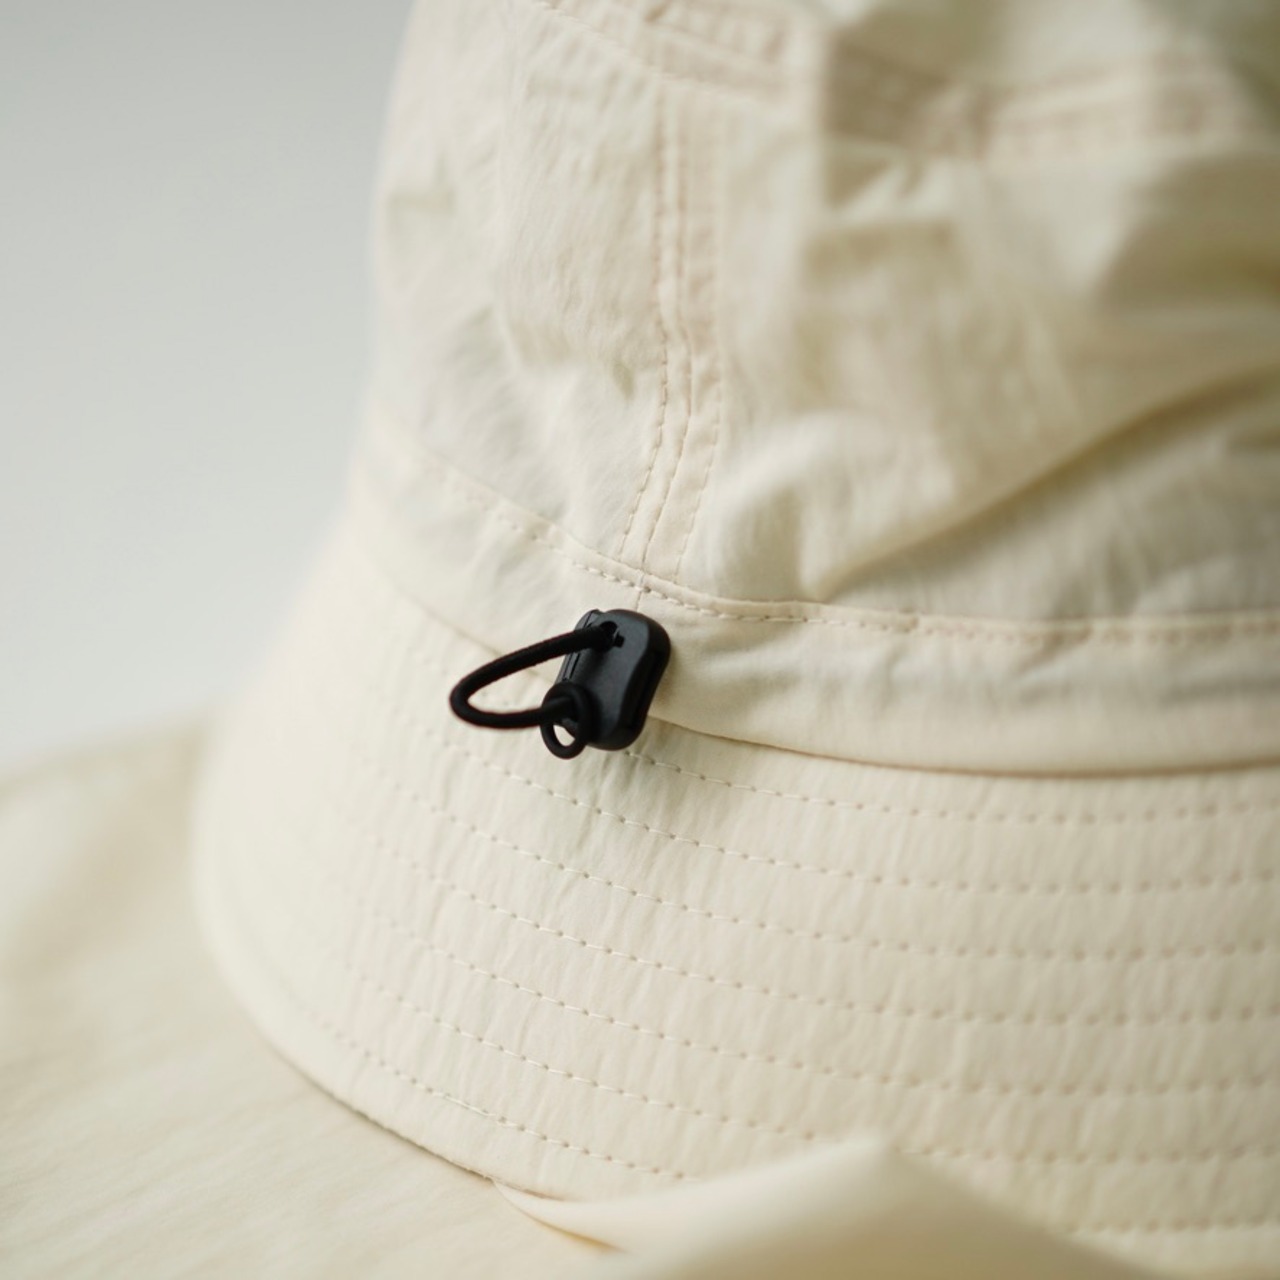 〈 GRIS 24SS 〉 Bucket Hat "帽子" / Ecru